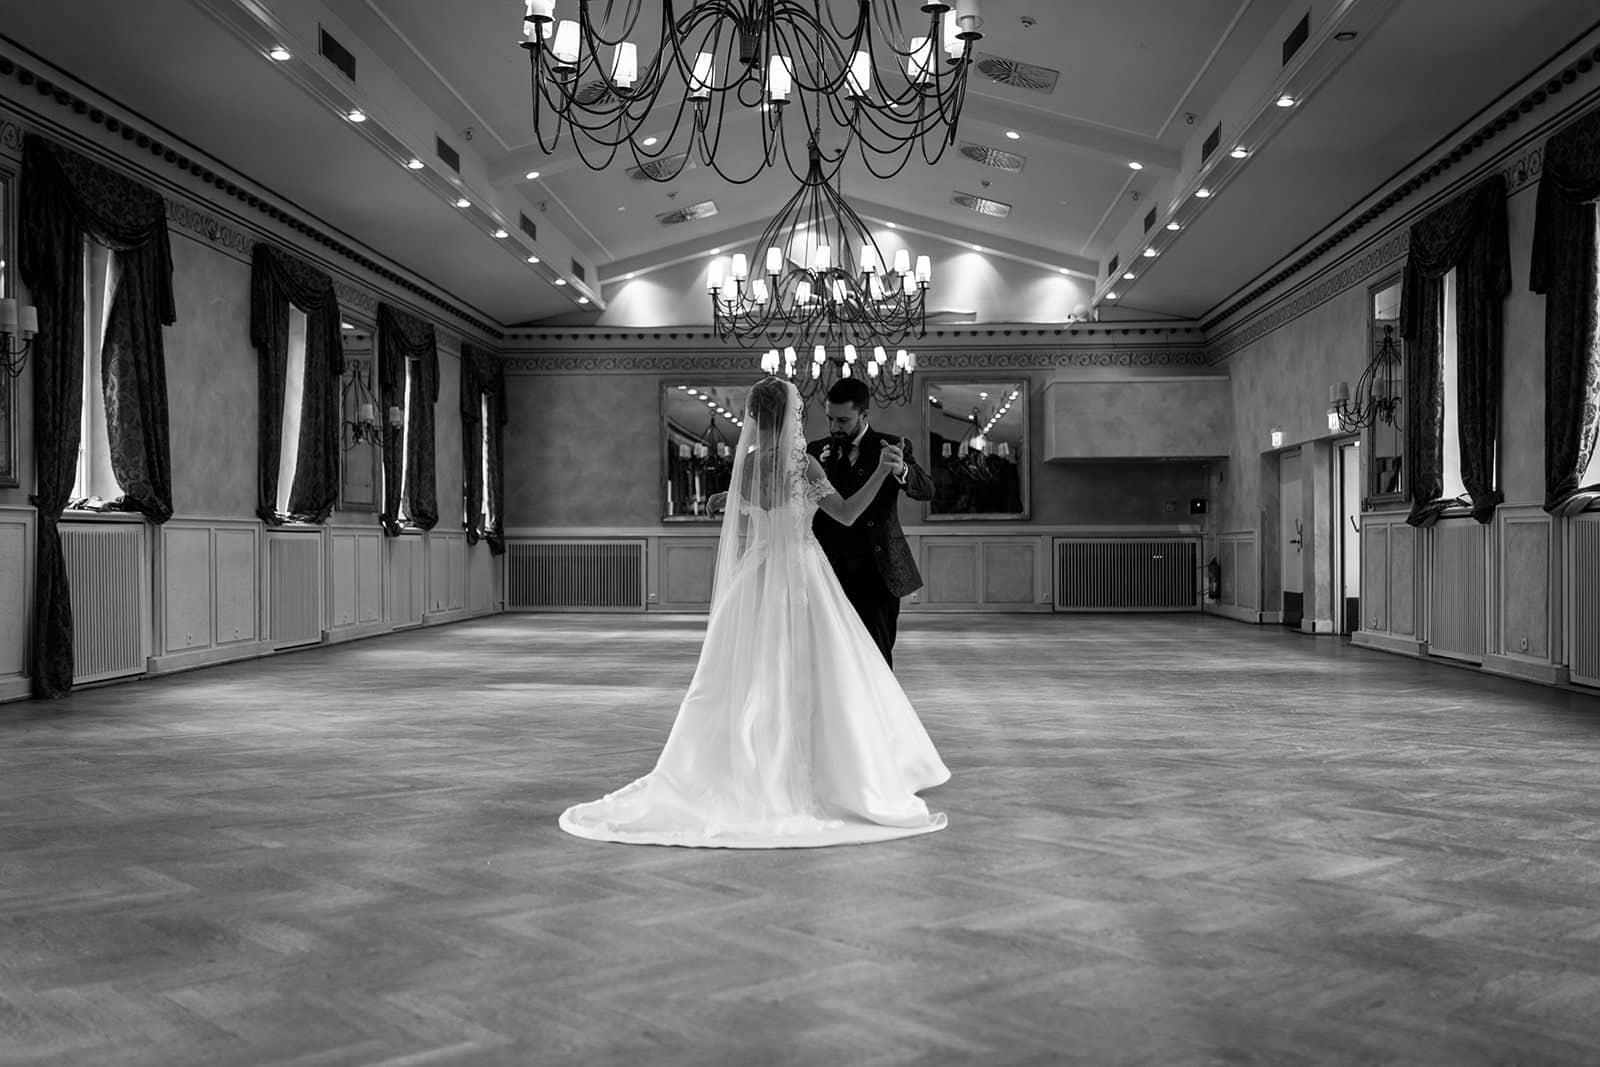 Tania-Flores-Photography-Hochzeitsfotograf-Koeln-84